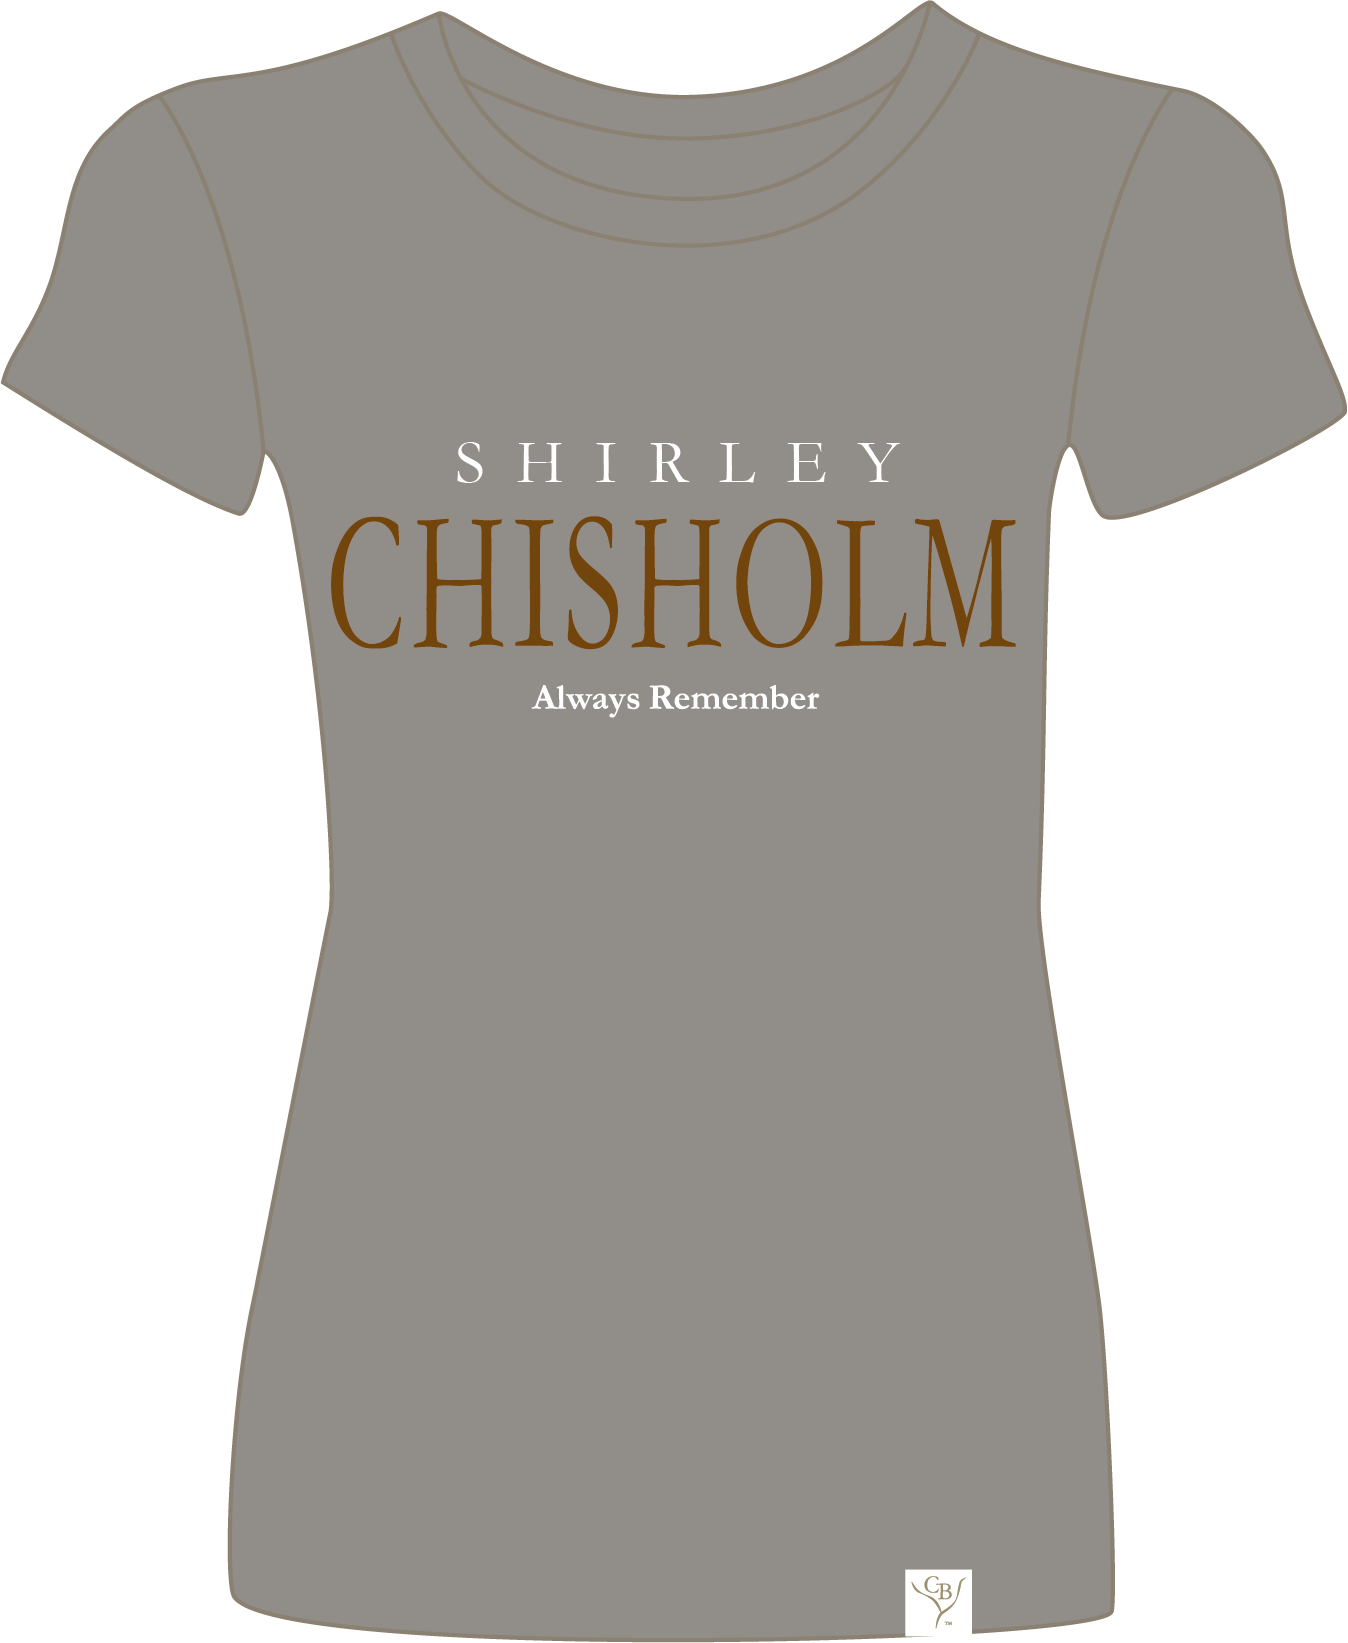 The Chisholm W